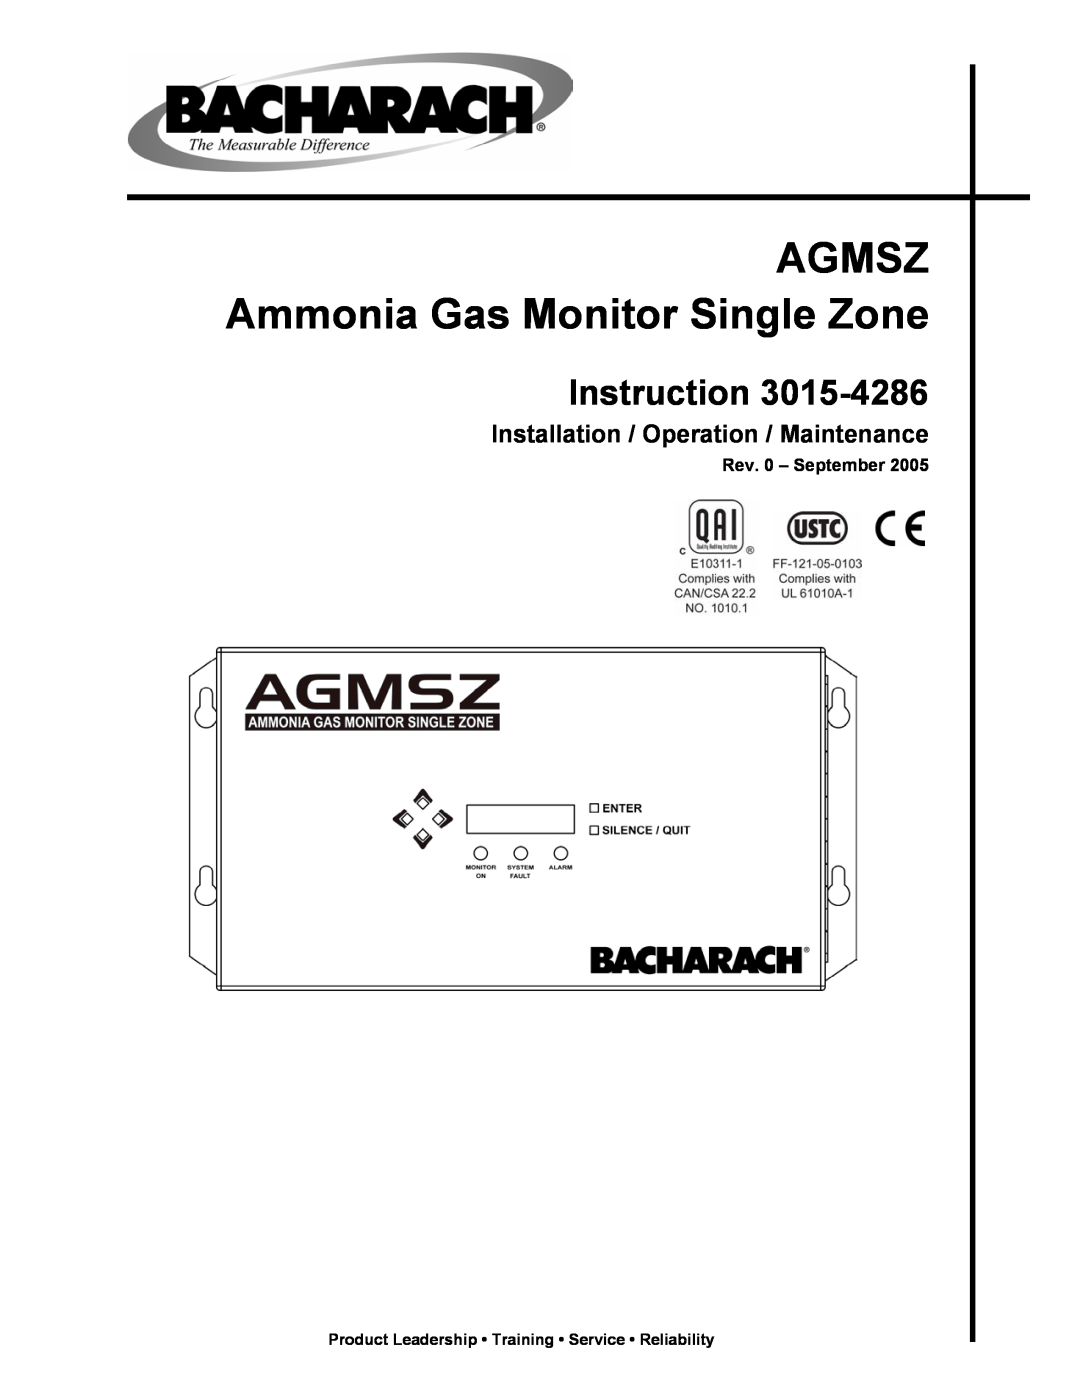 Bacharach 3015-4286 manual AGMSZ Ammonia Gas Monitor Single Zone, Installation / Operation / Maintenance, Instruction 